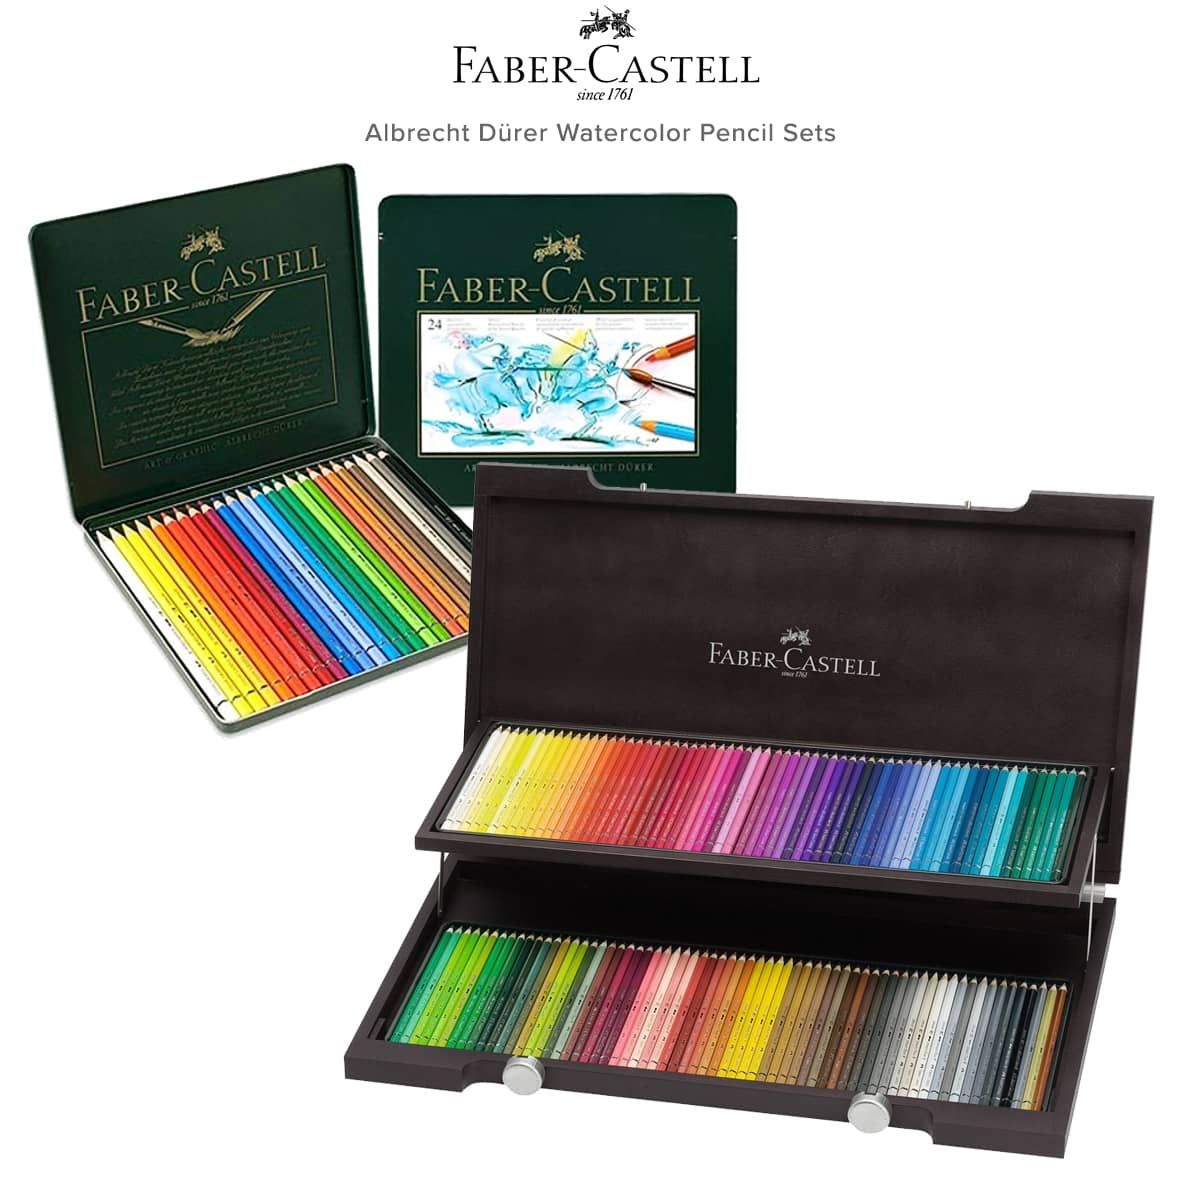 https://www.jerrysartarama.com/media/catalog/product/cache/ecb49a32eeb5603594b082bd5fe65733/f/a/faber-castell-albrecht-durer-artists-watercolor-pencil-sets.jpg